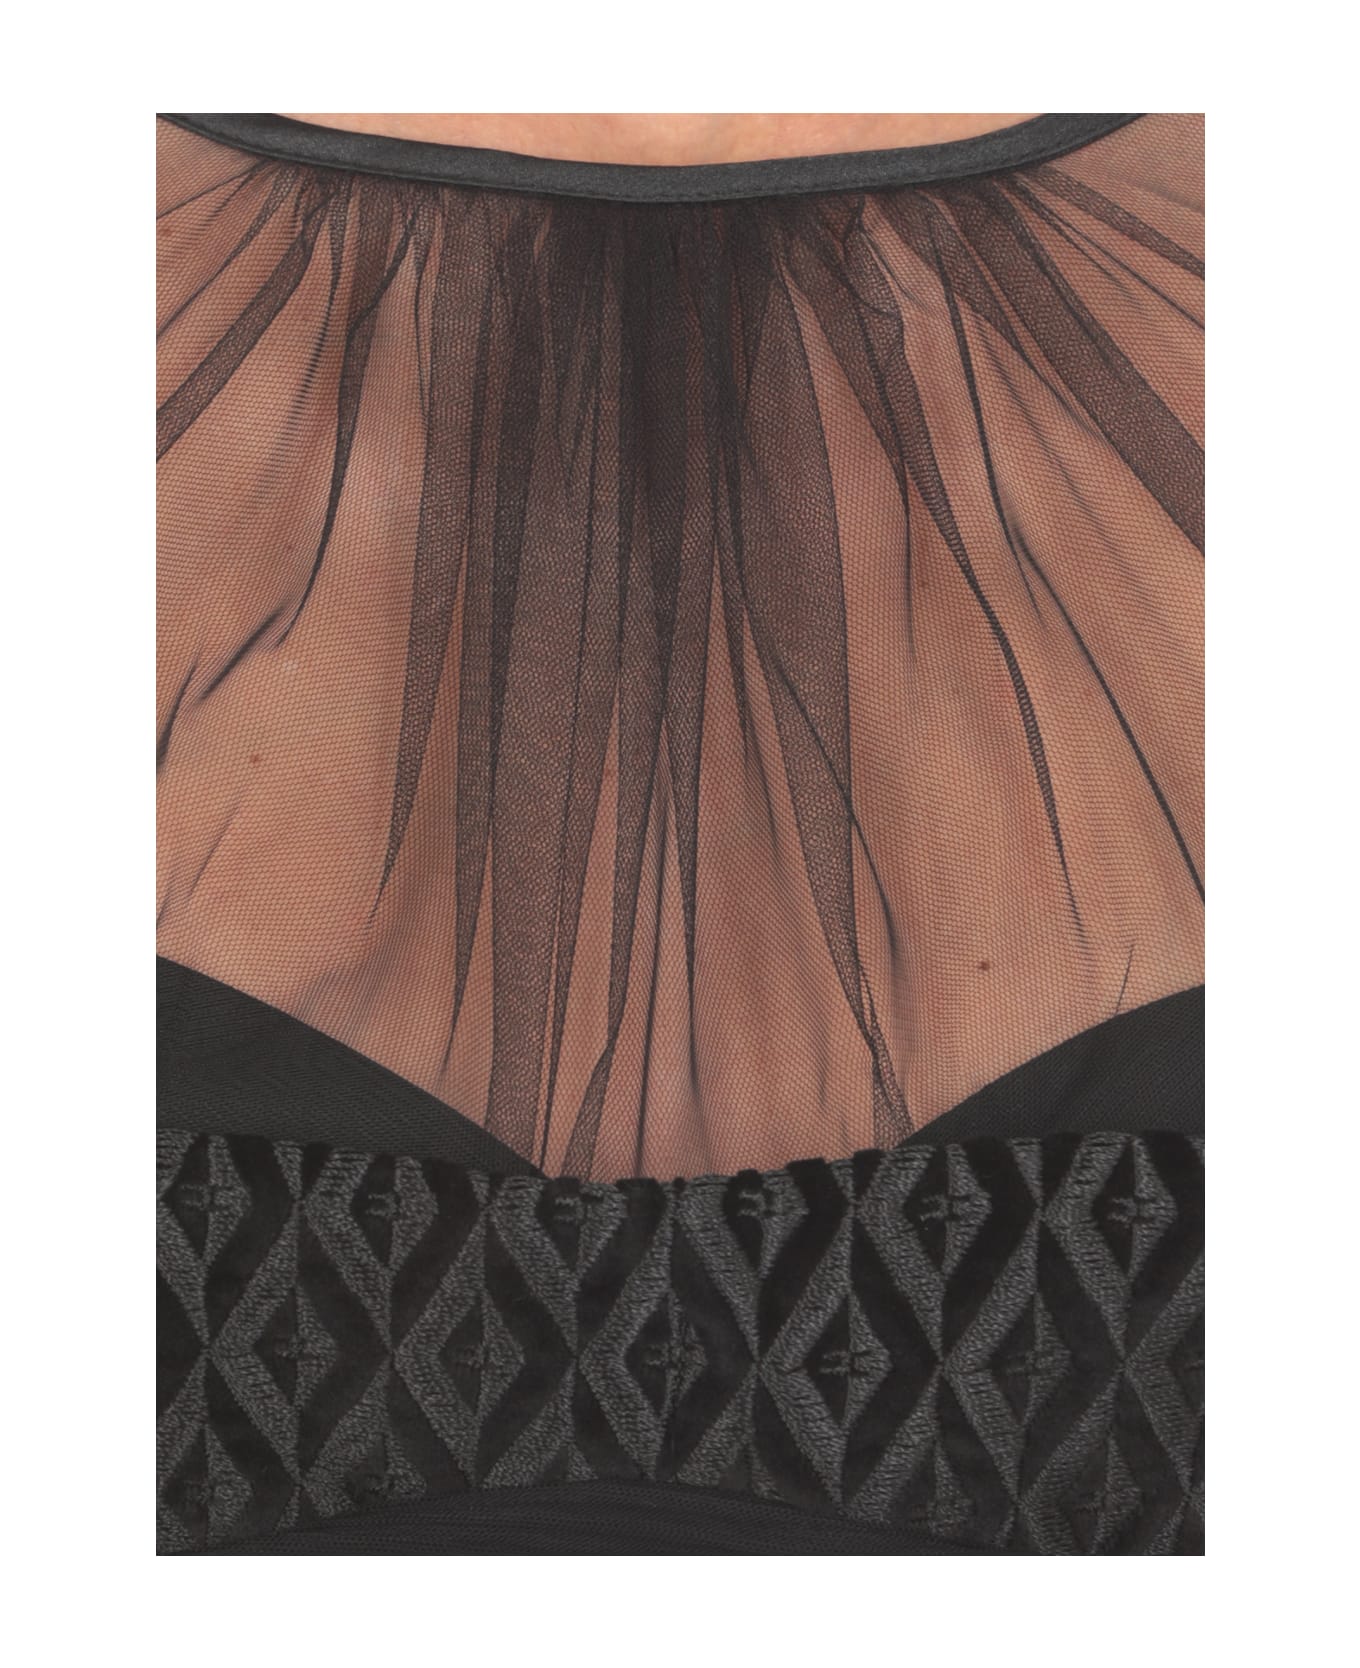 Elisabetta Franchi Red Carpet Dress With Embroidered Velvet Bodice - Black